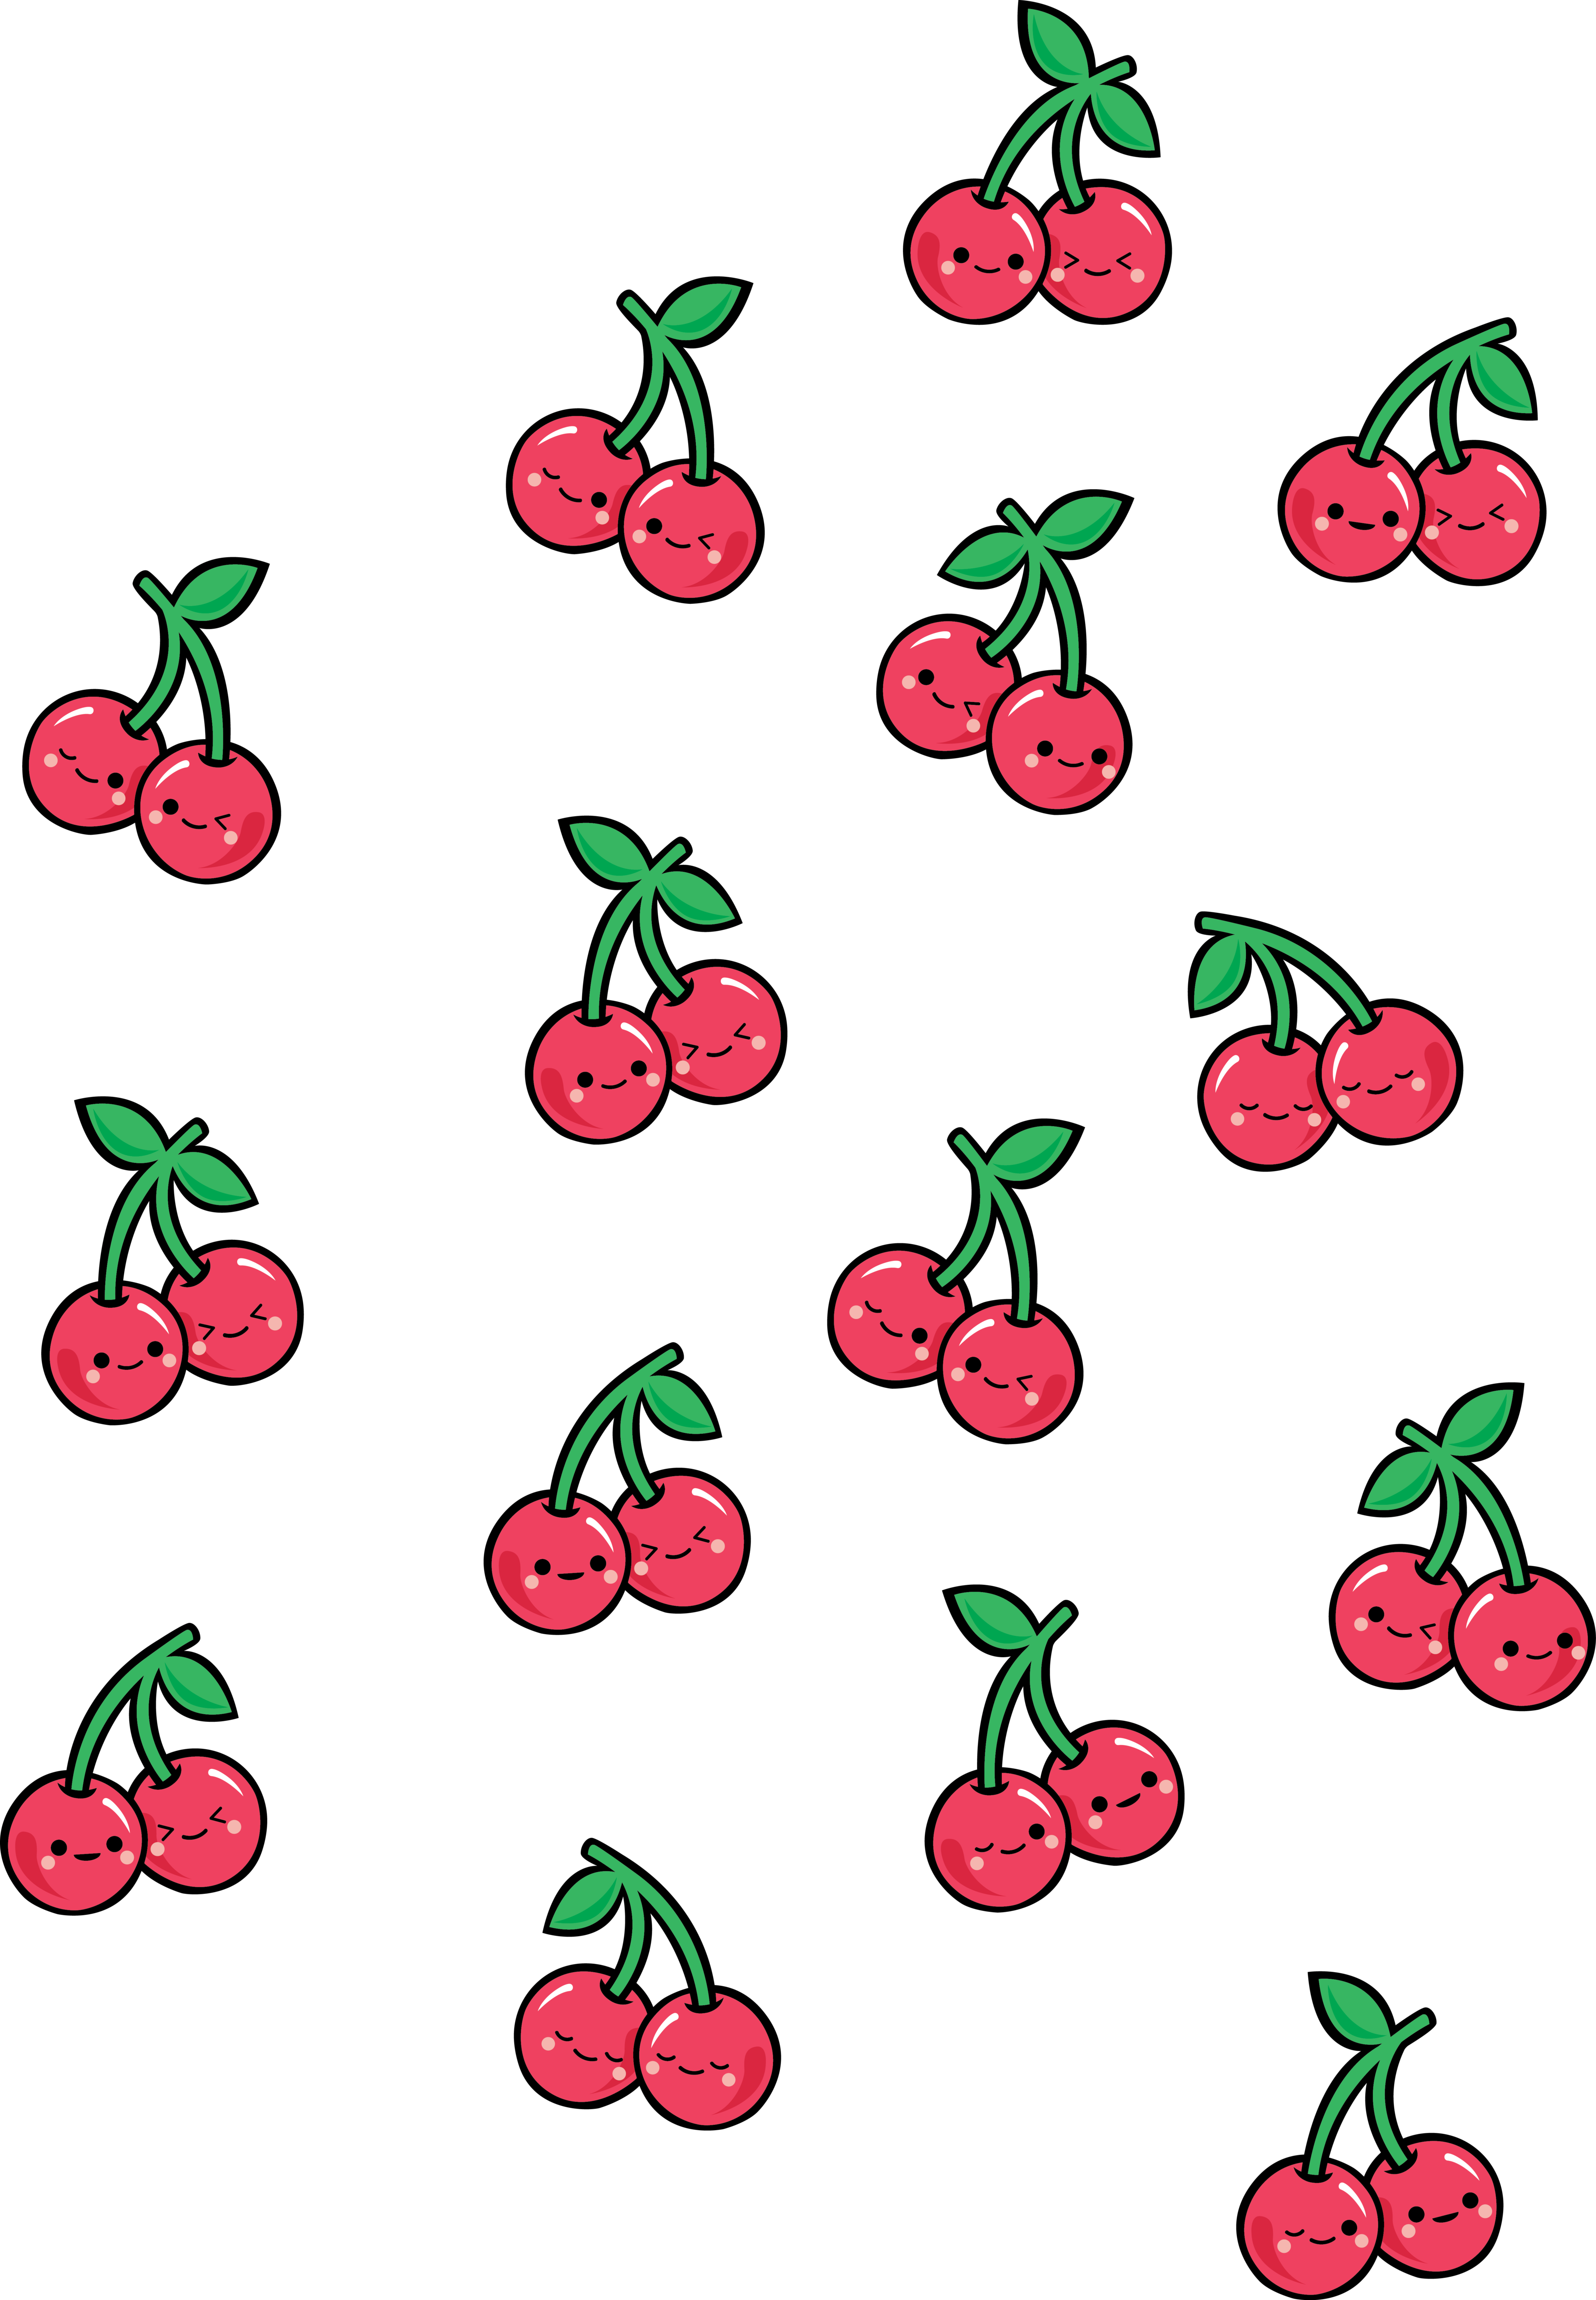 Cheeky cherries casetify iphone art design illustration fruit cute iphone wallpaper fall fruit wallpaper pretty wallpapers